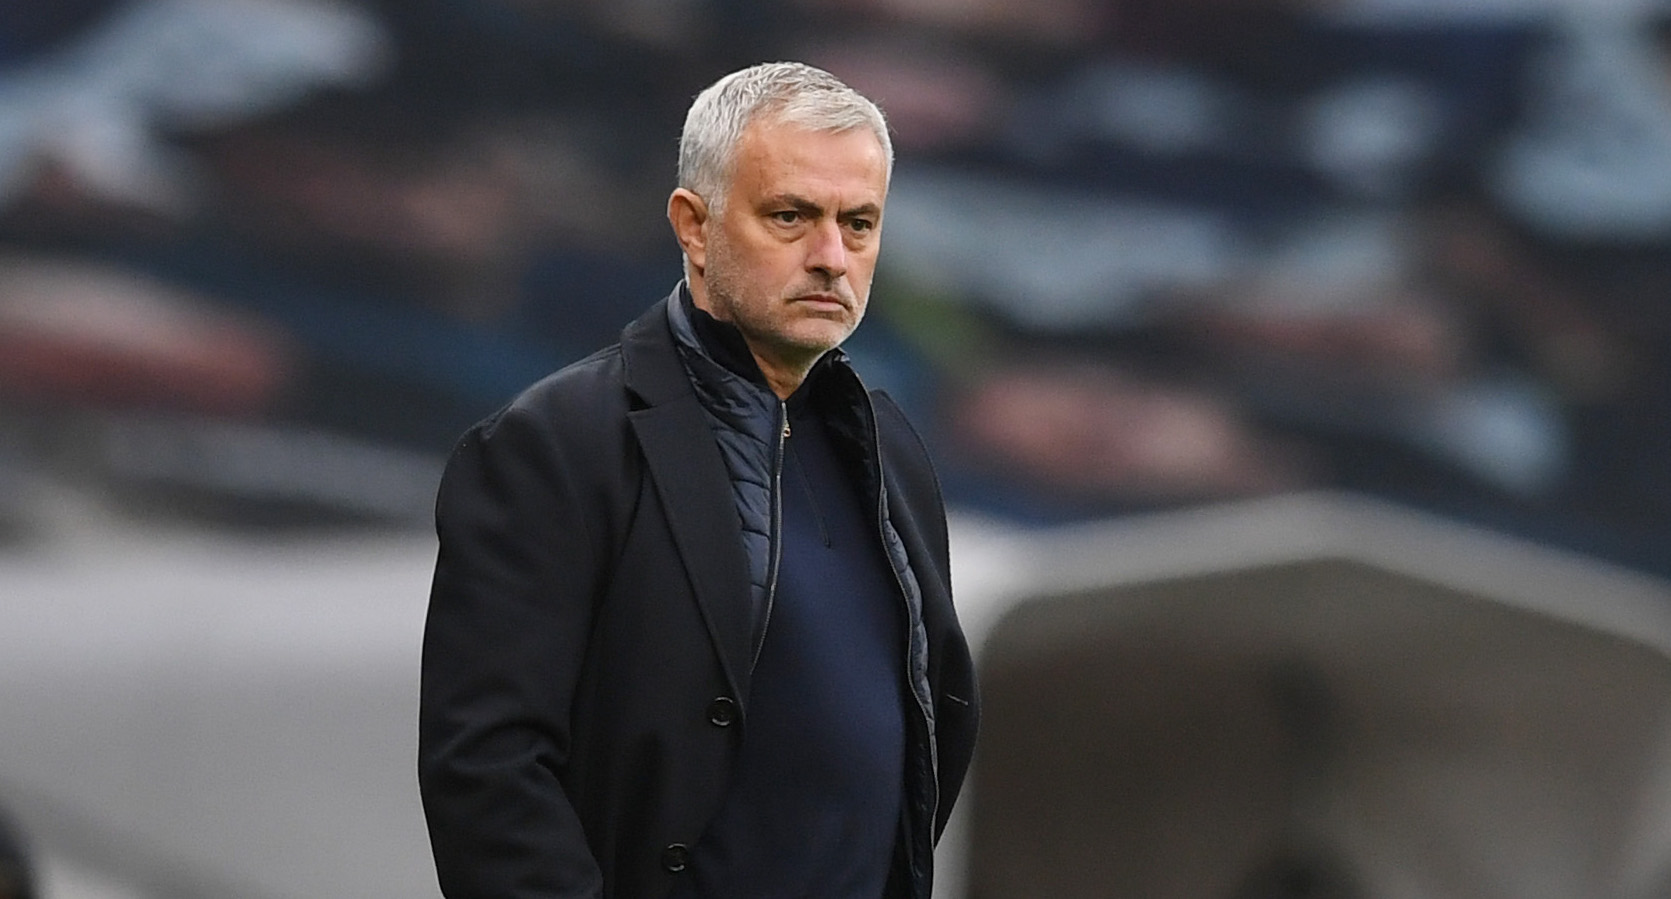 Jose Mourinho sacked by European Super League club Tottenham